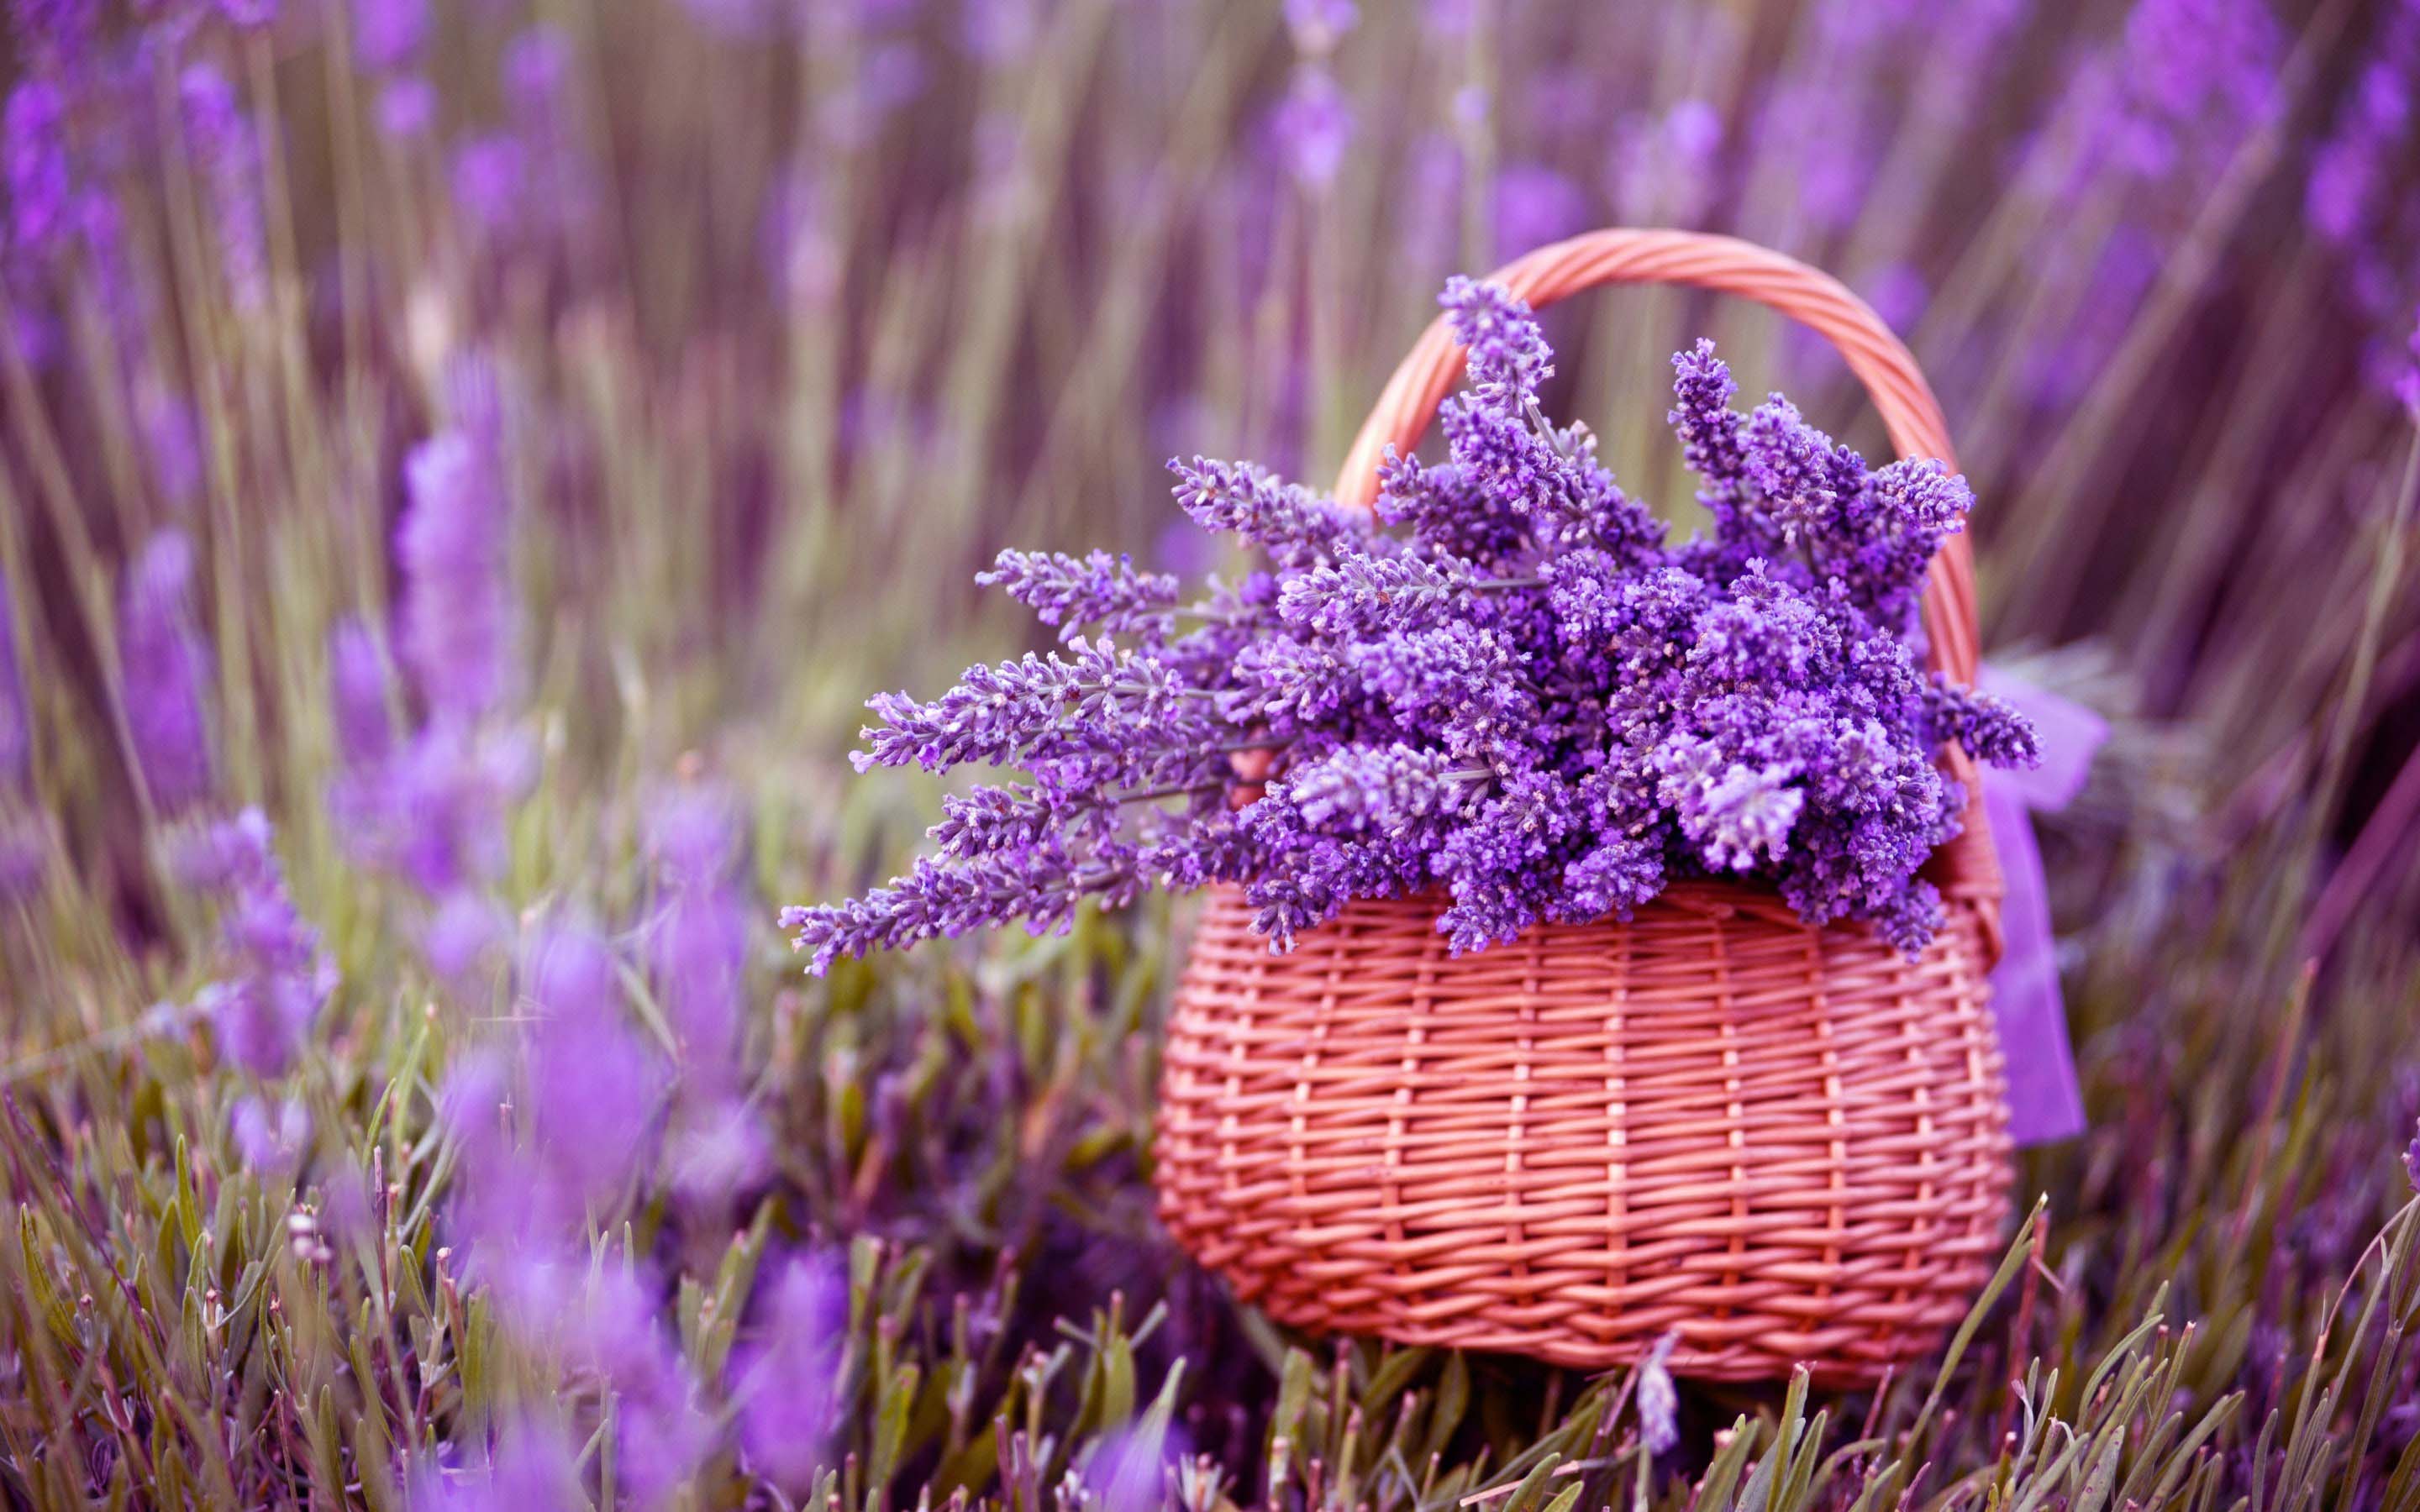 Lavender Flower Wallpaper HD